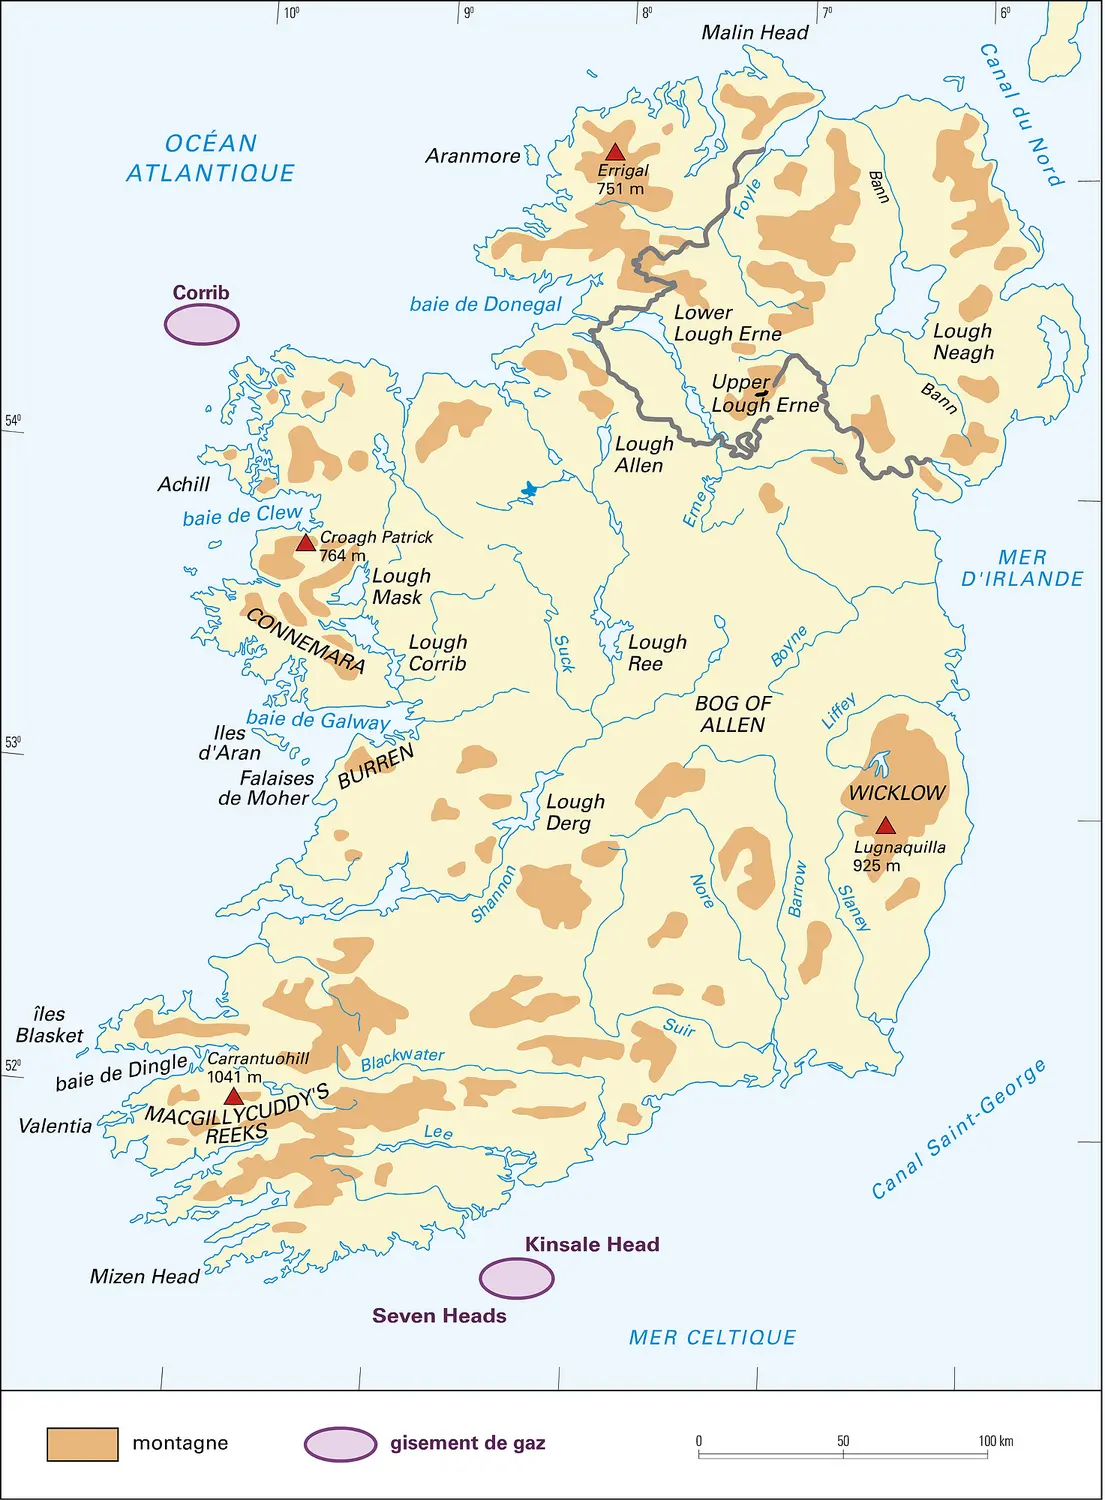 Irlande : milieux naturels